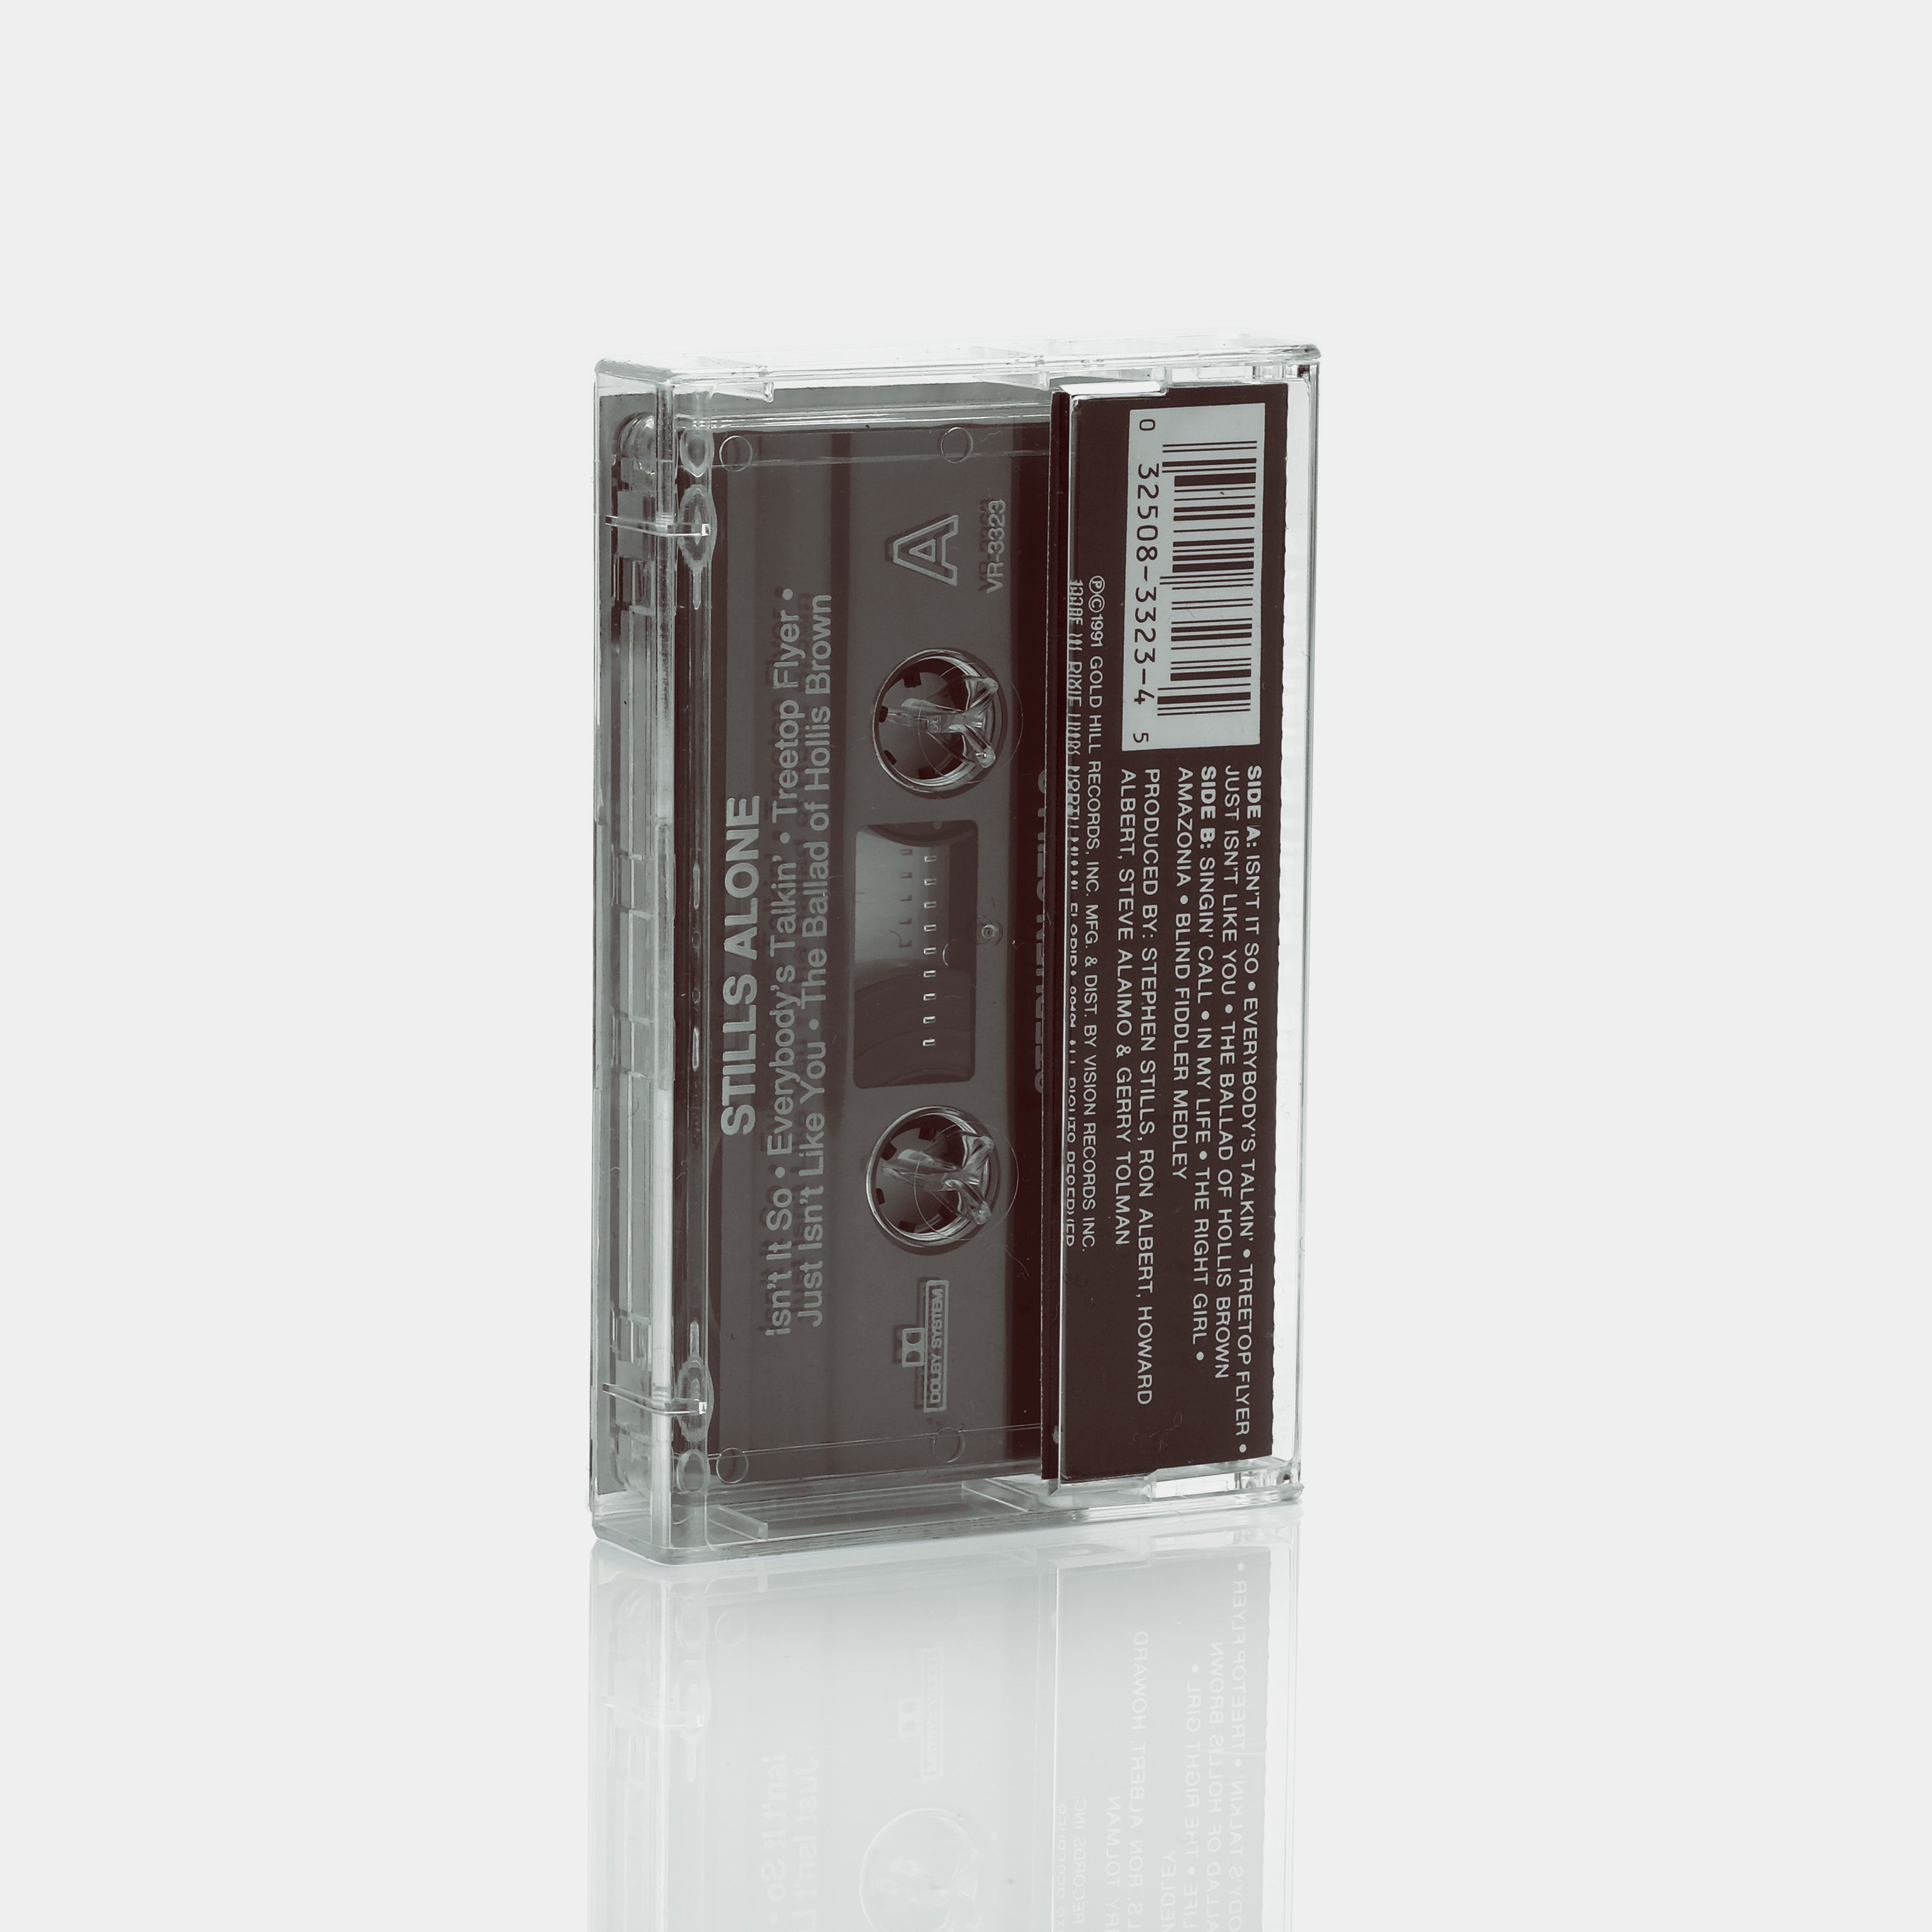 Stephen Stills - Stills Alone Cassette Tape